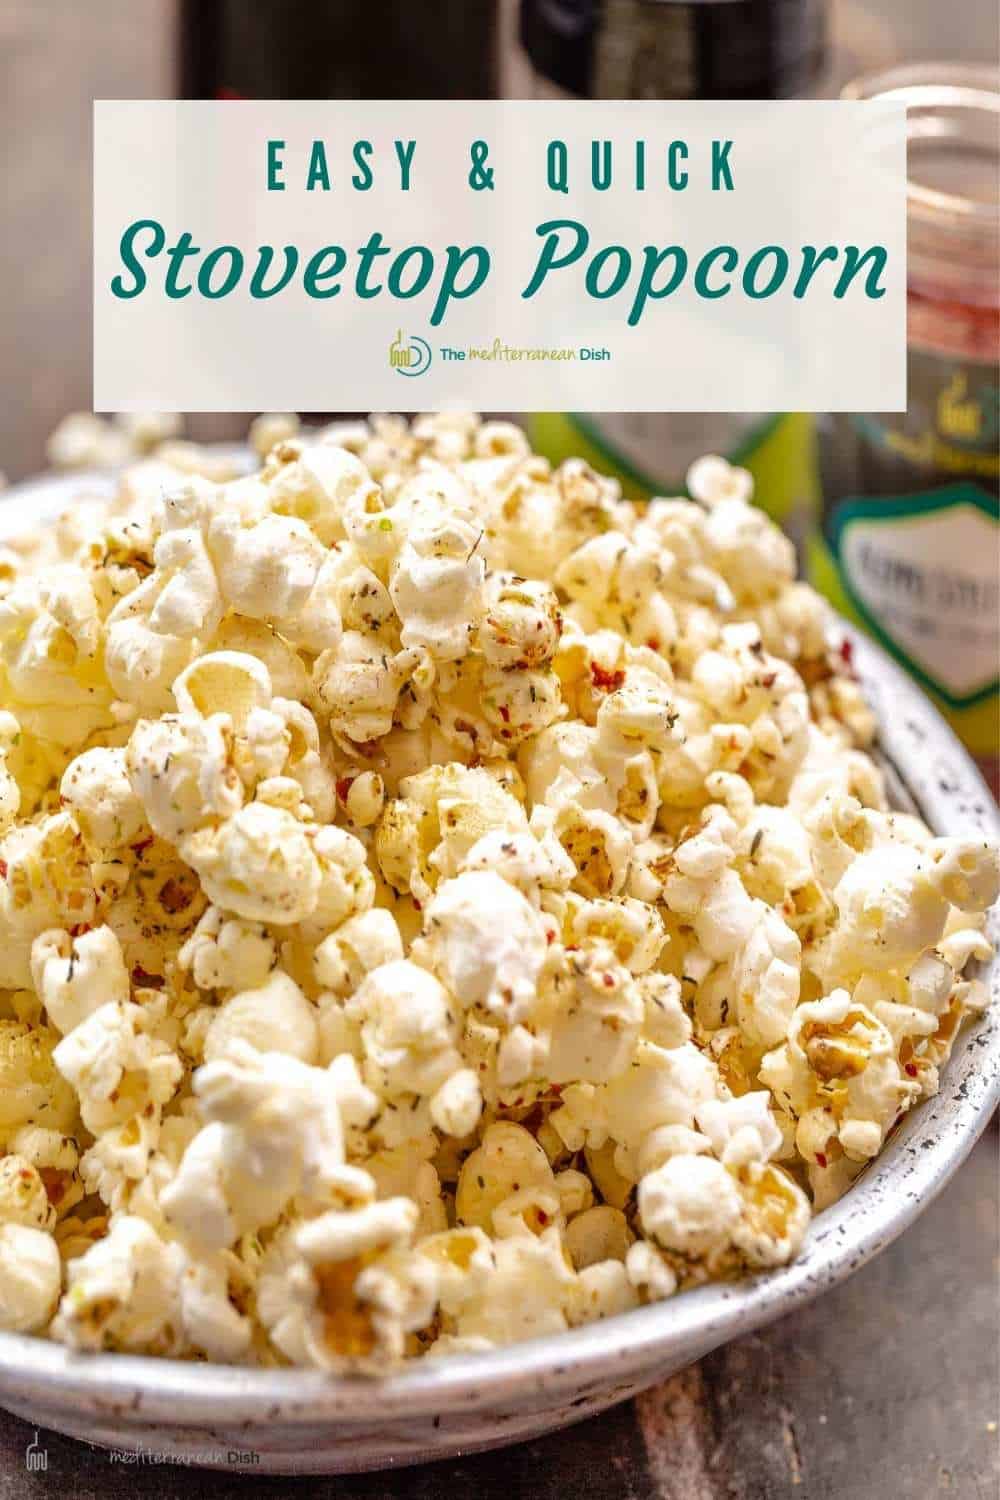 Homemade Popcorn JAN 2022 1 